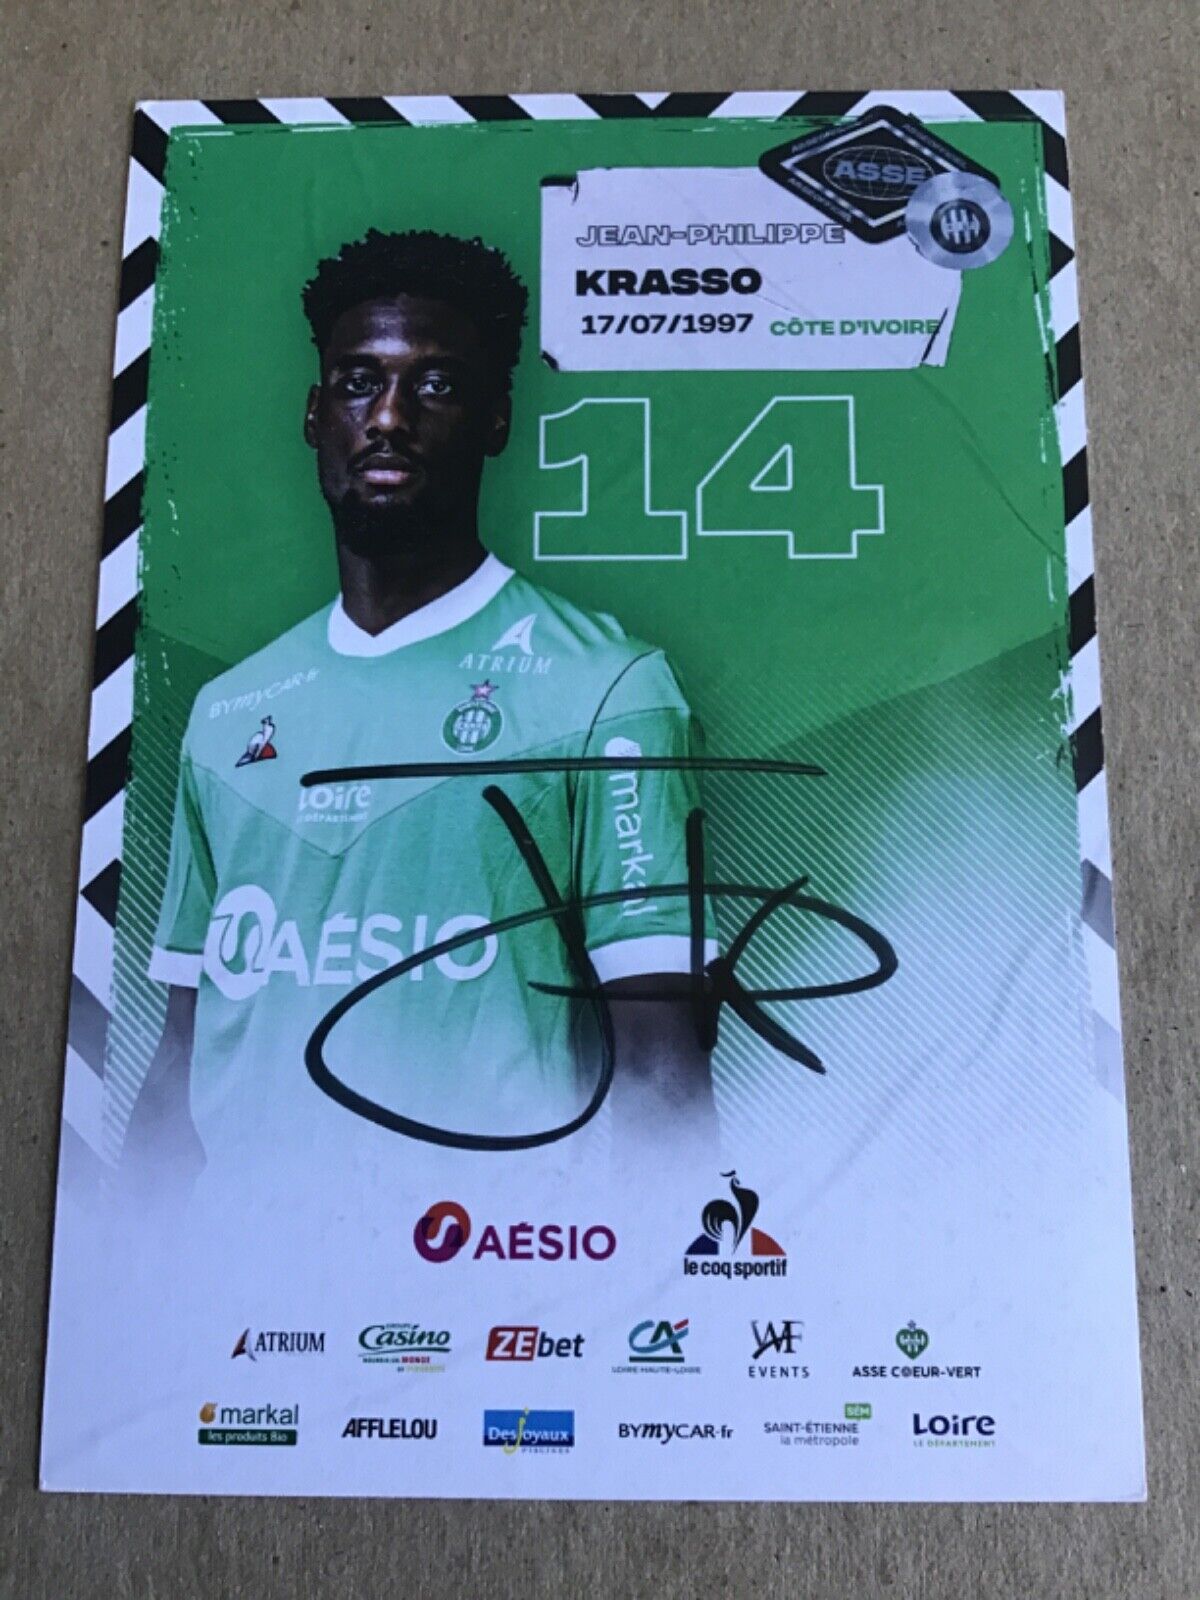 Jean-Philippe Krasso, Ivory Coast 🇨🇮 AS Saint-Etienne 2020/21 hand signed